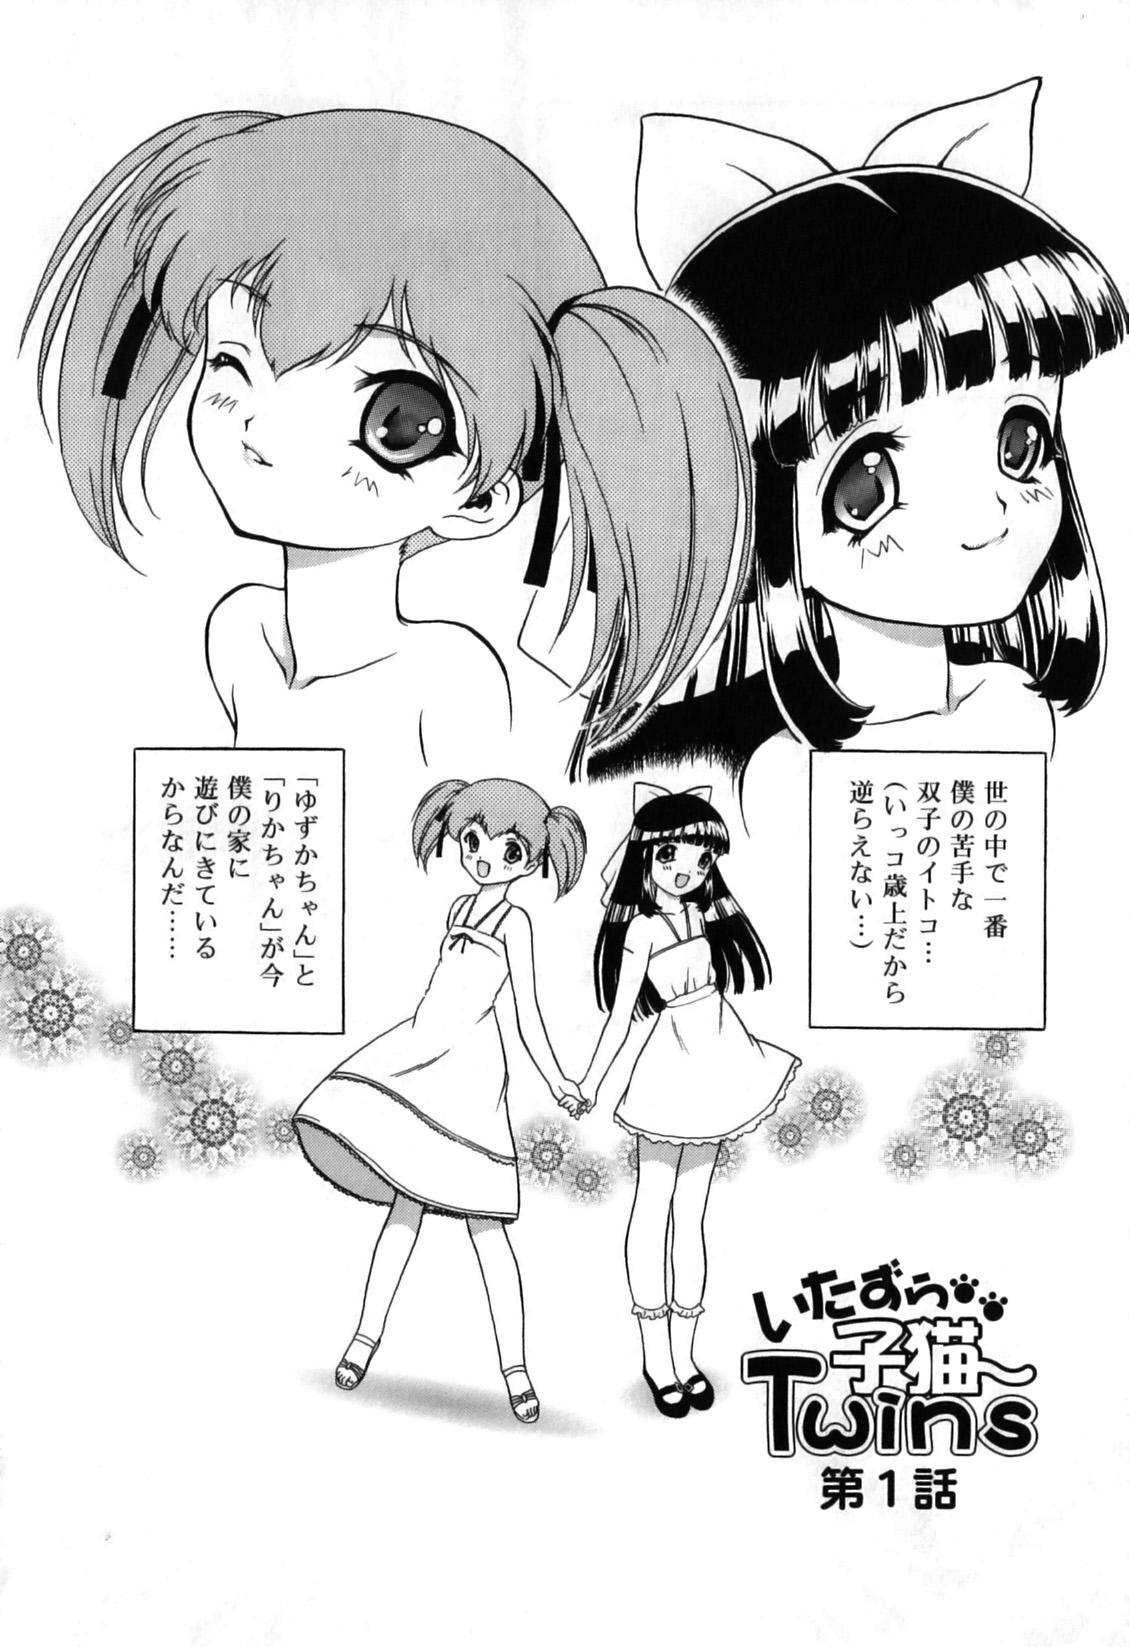 Itazura Koneko Twins 13